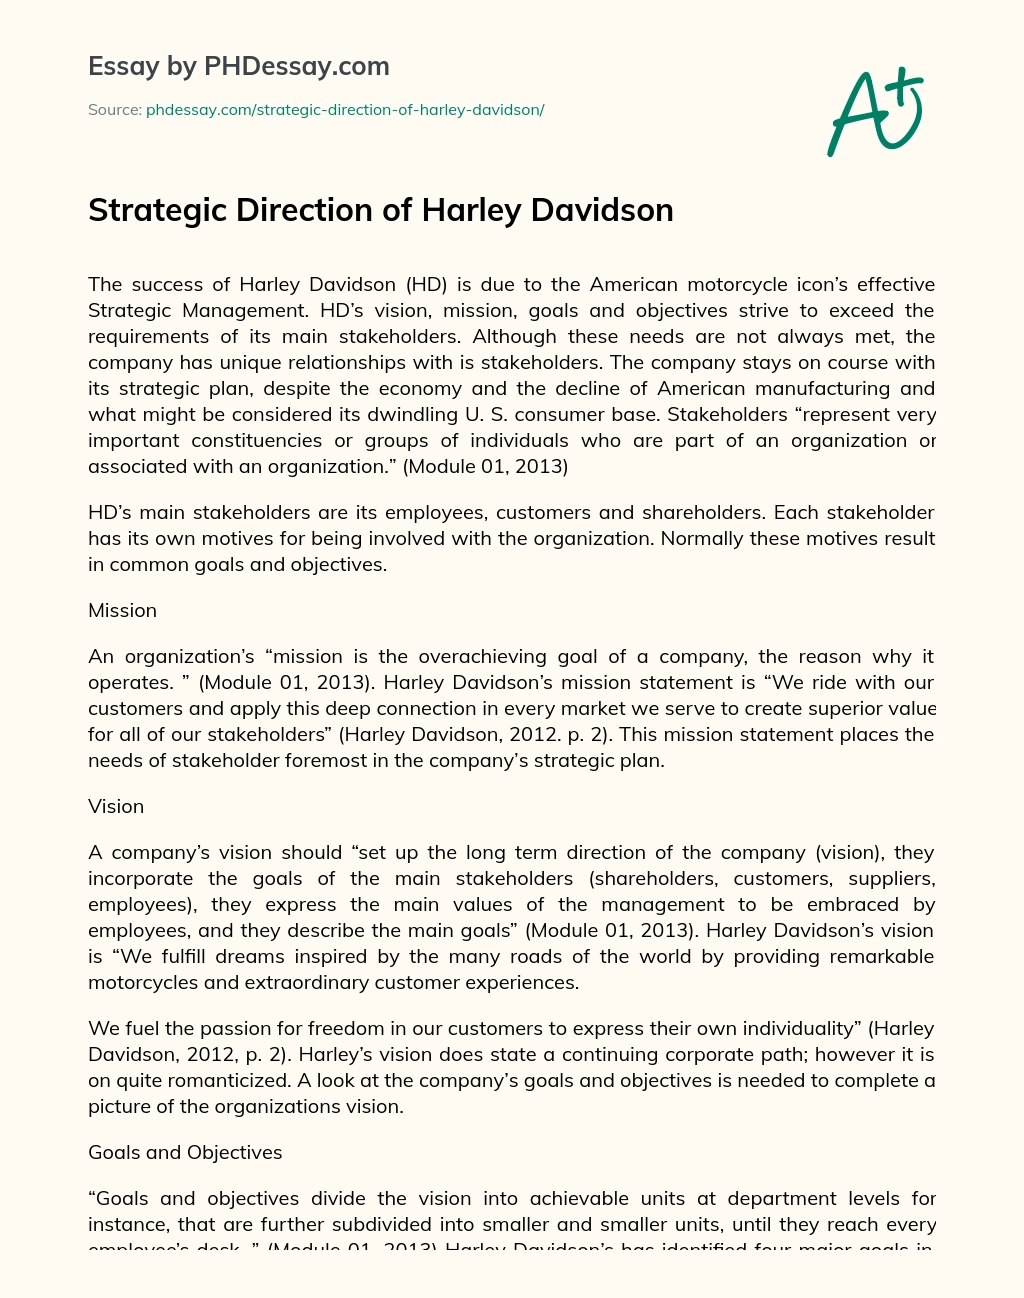 Strategic Direction of Harley Davidson essay